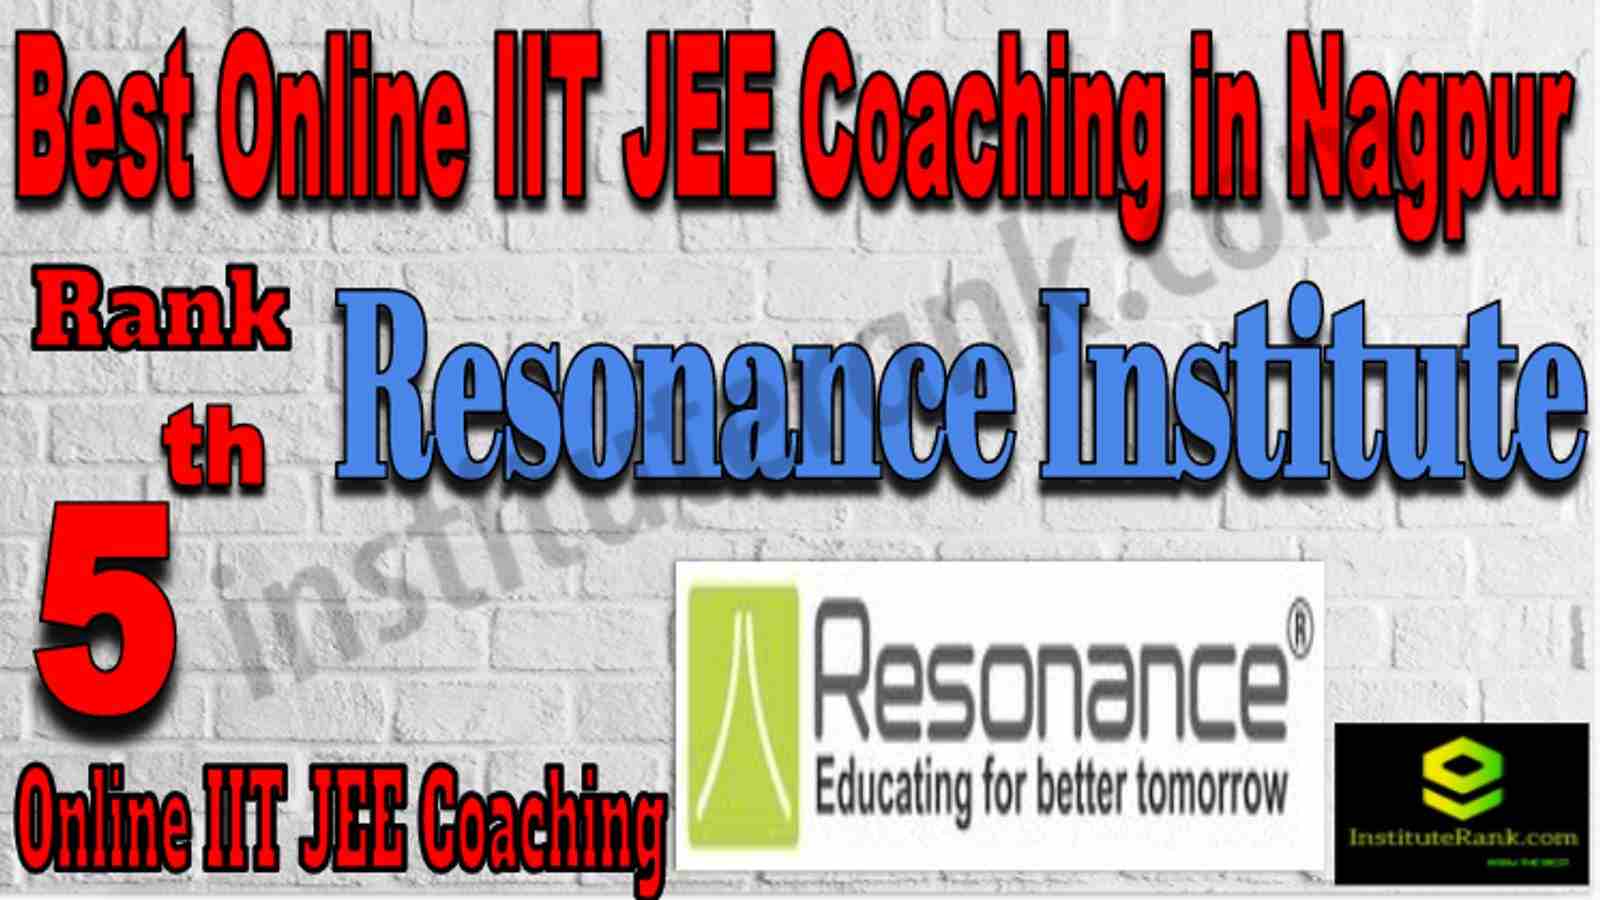 Rank 5 Best Online IIT JEE Coaching in Nagpur